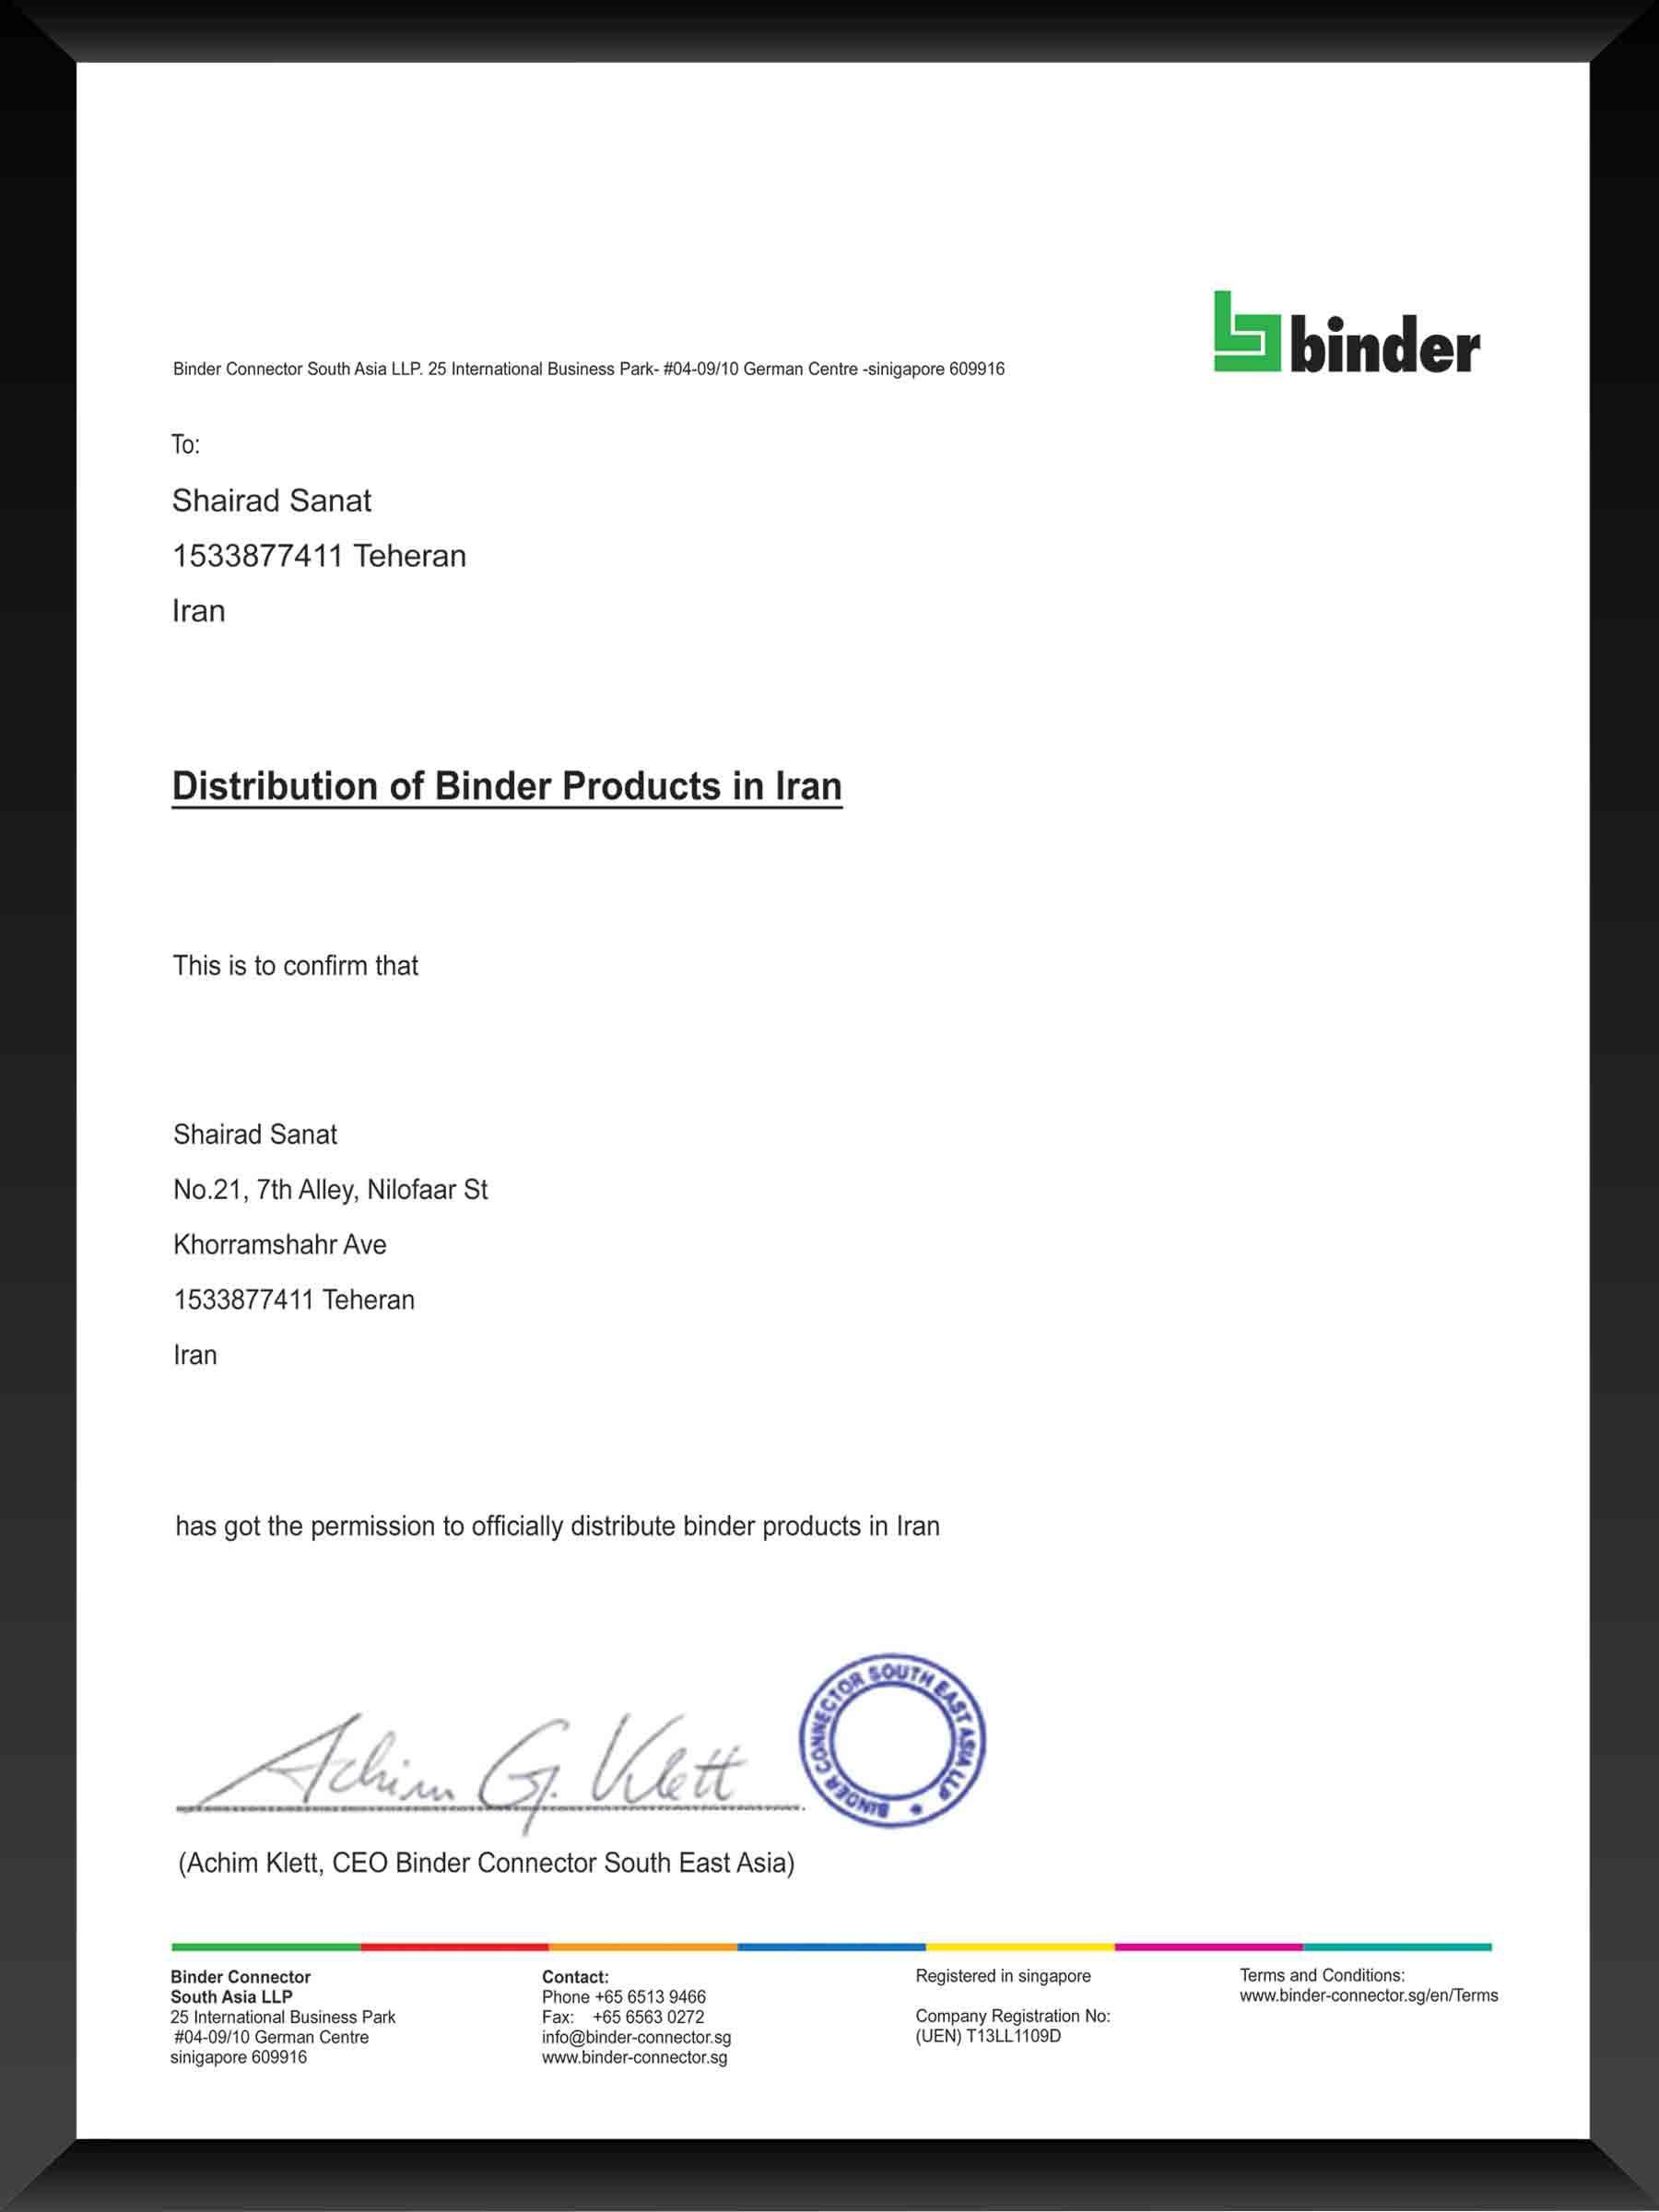 Binder_connector